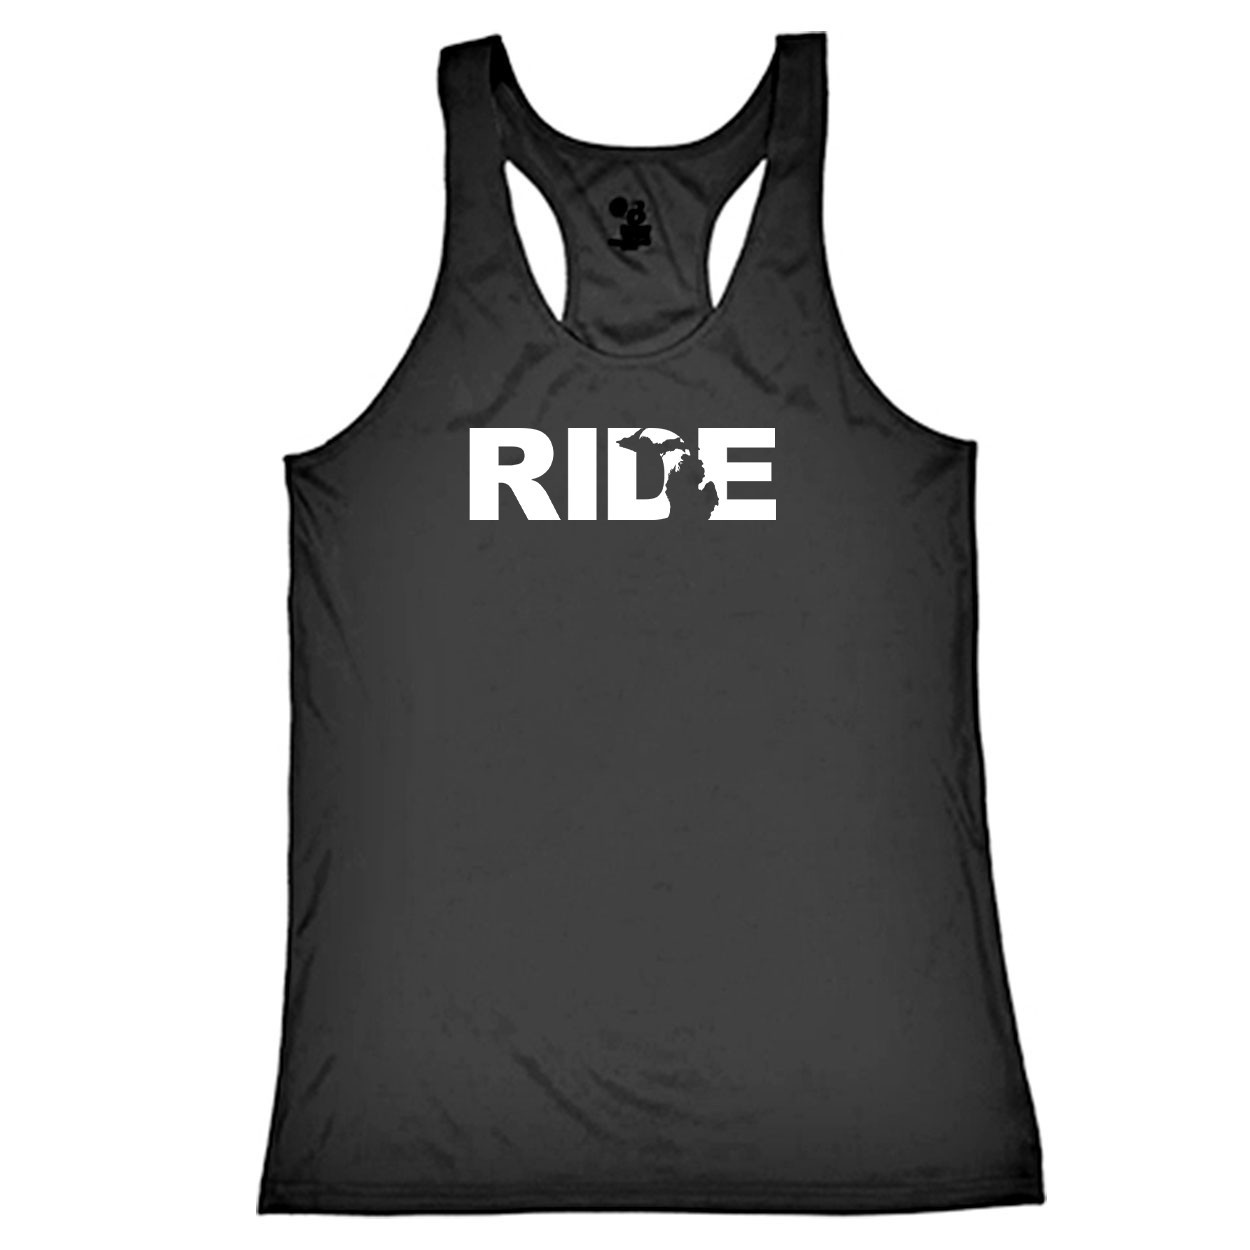 Ride Michigan Classic Youth Girls Performance Racerback Tank Top Black (White Logo)